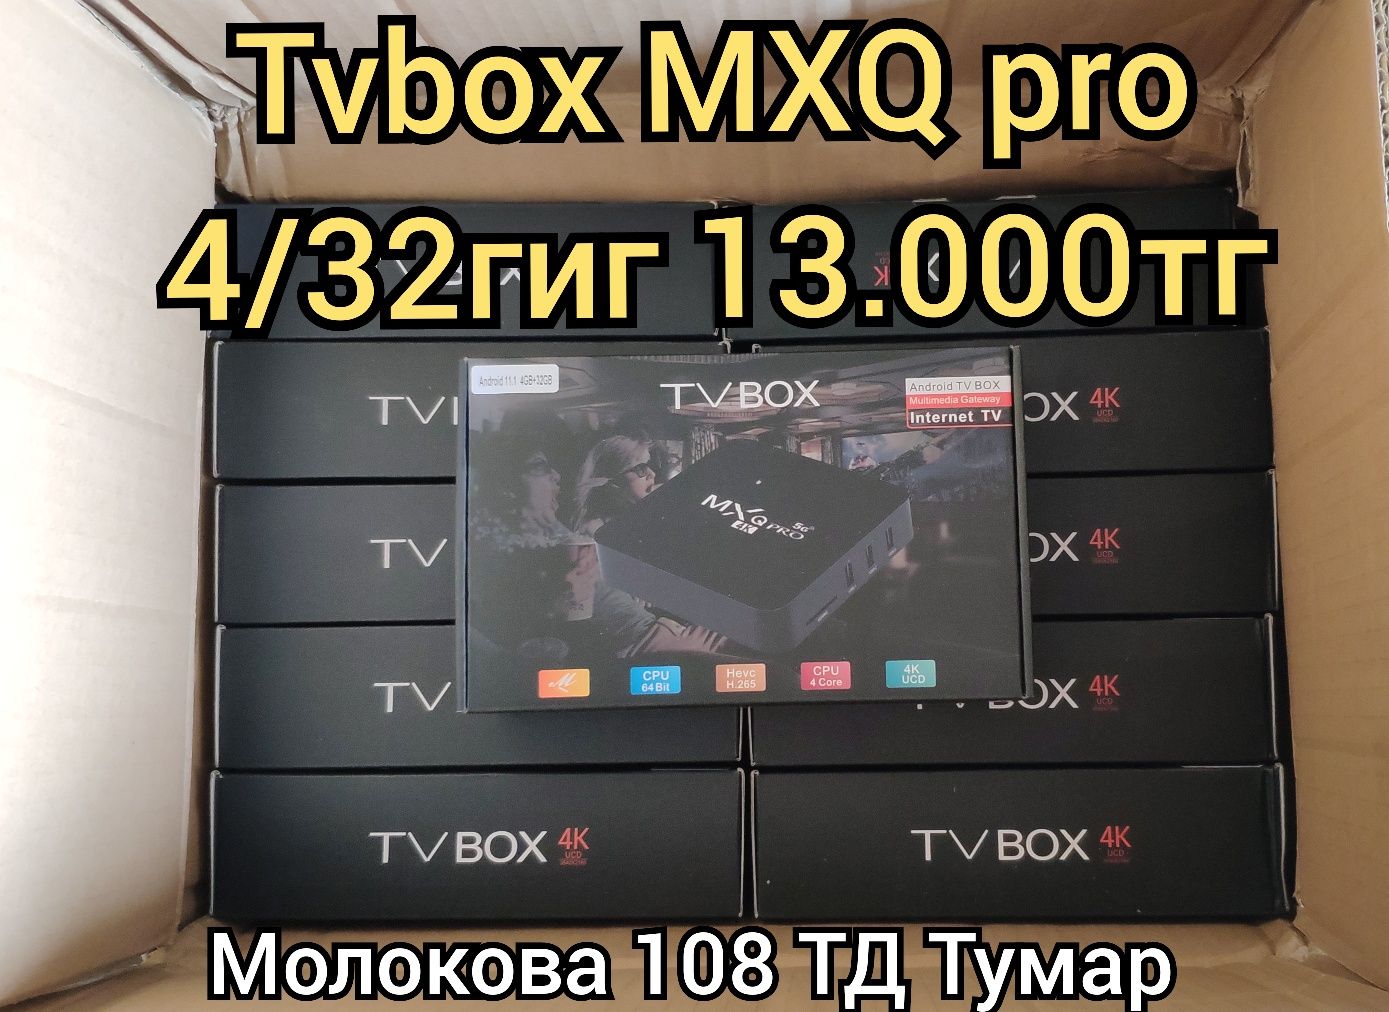 Tvbox MXQ pro 4/32 гига 11 андроид тв бокс смарт приставка телевизора